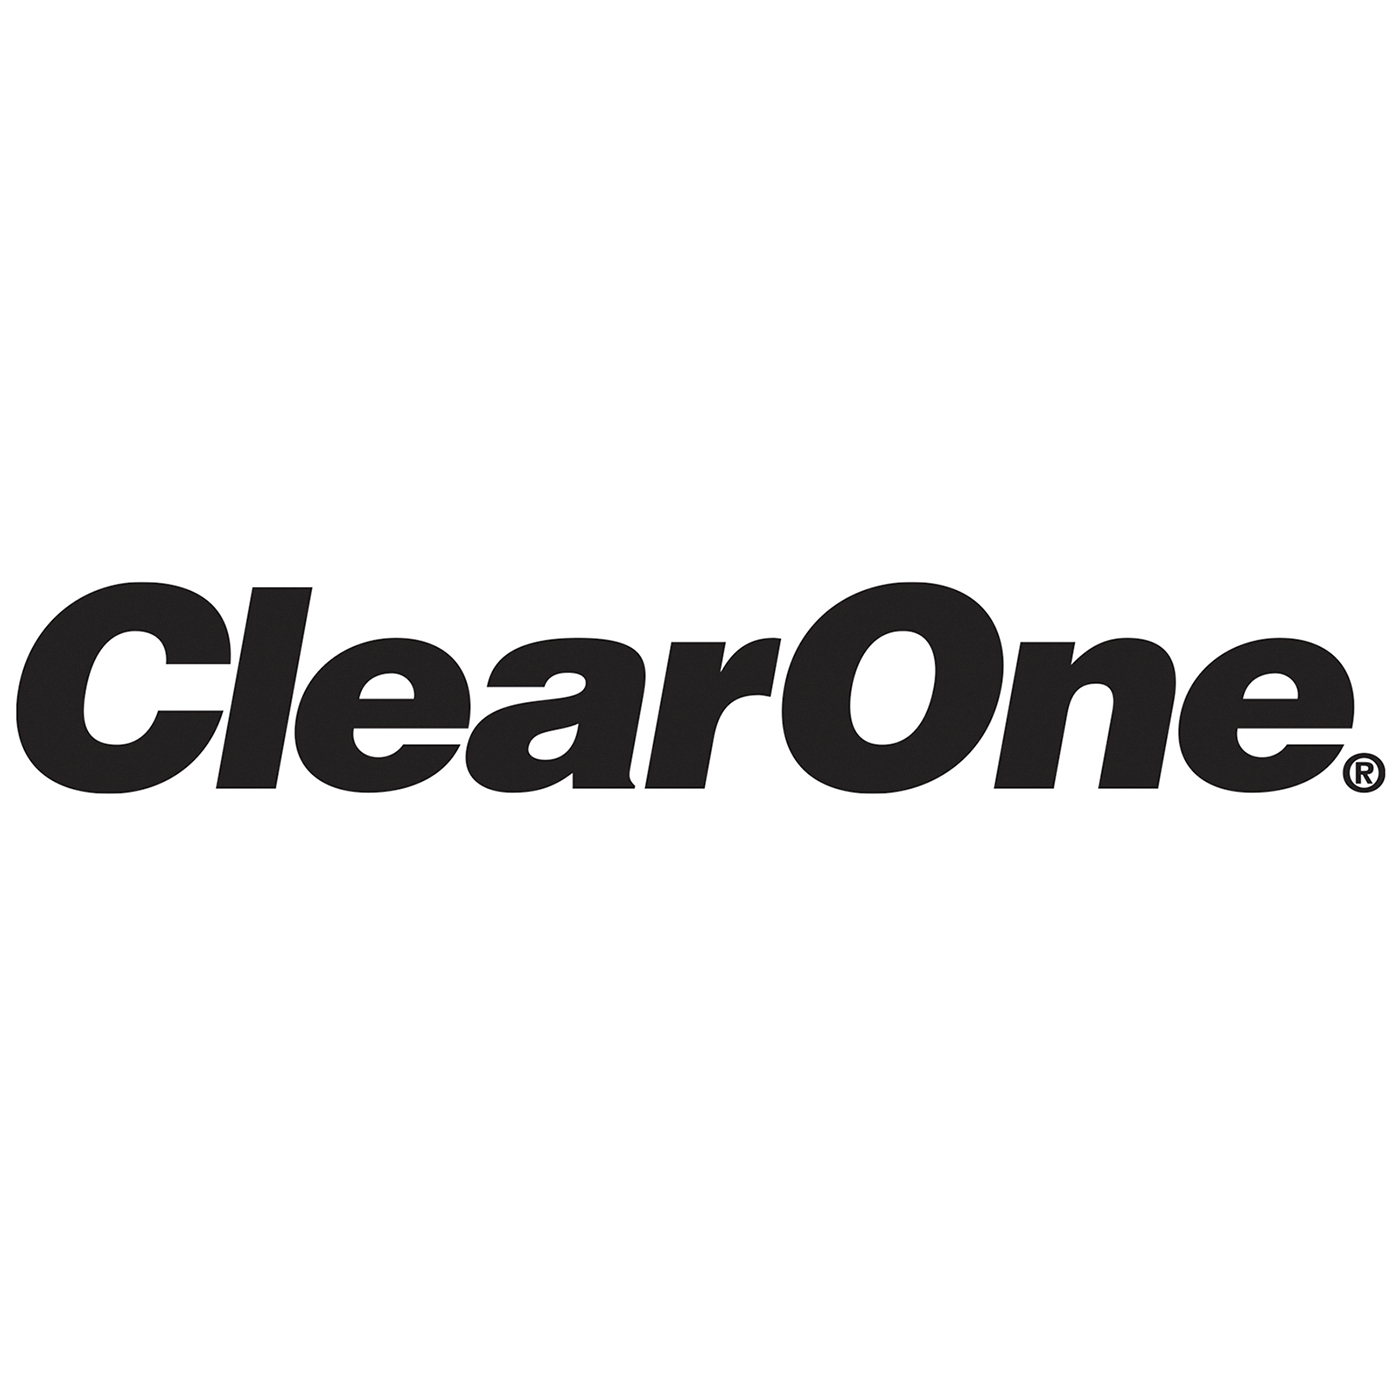 ClearOne Logo- Black -300DPI square proportion.jpg